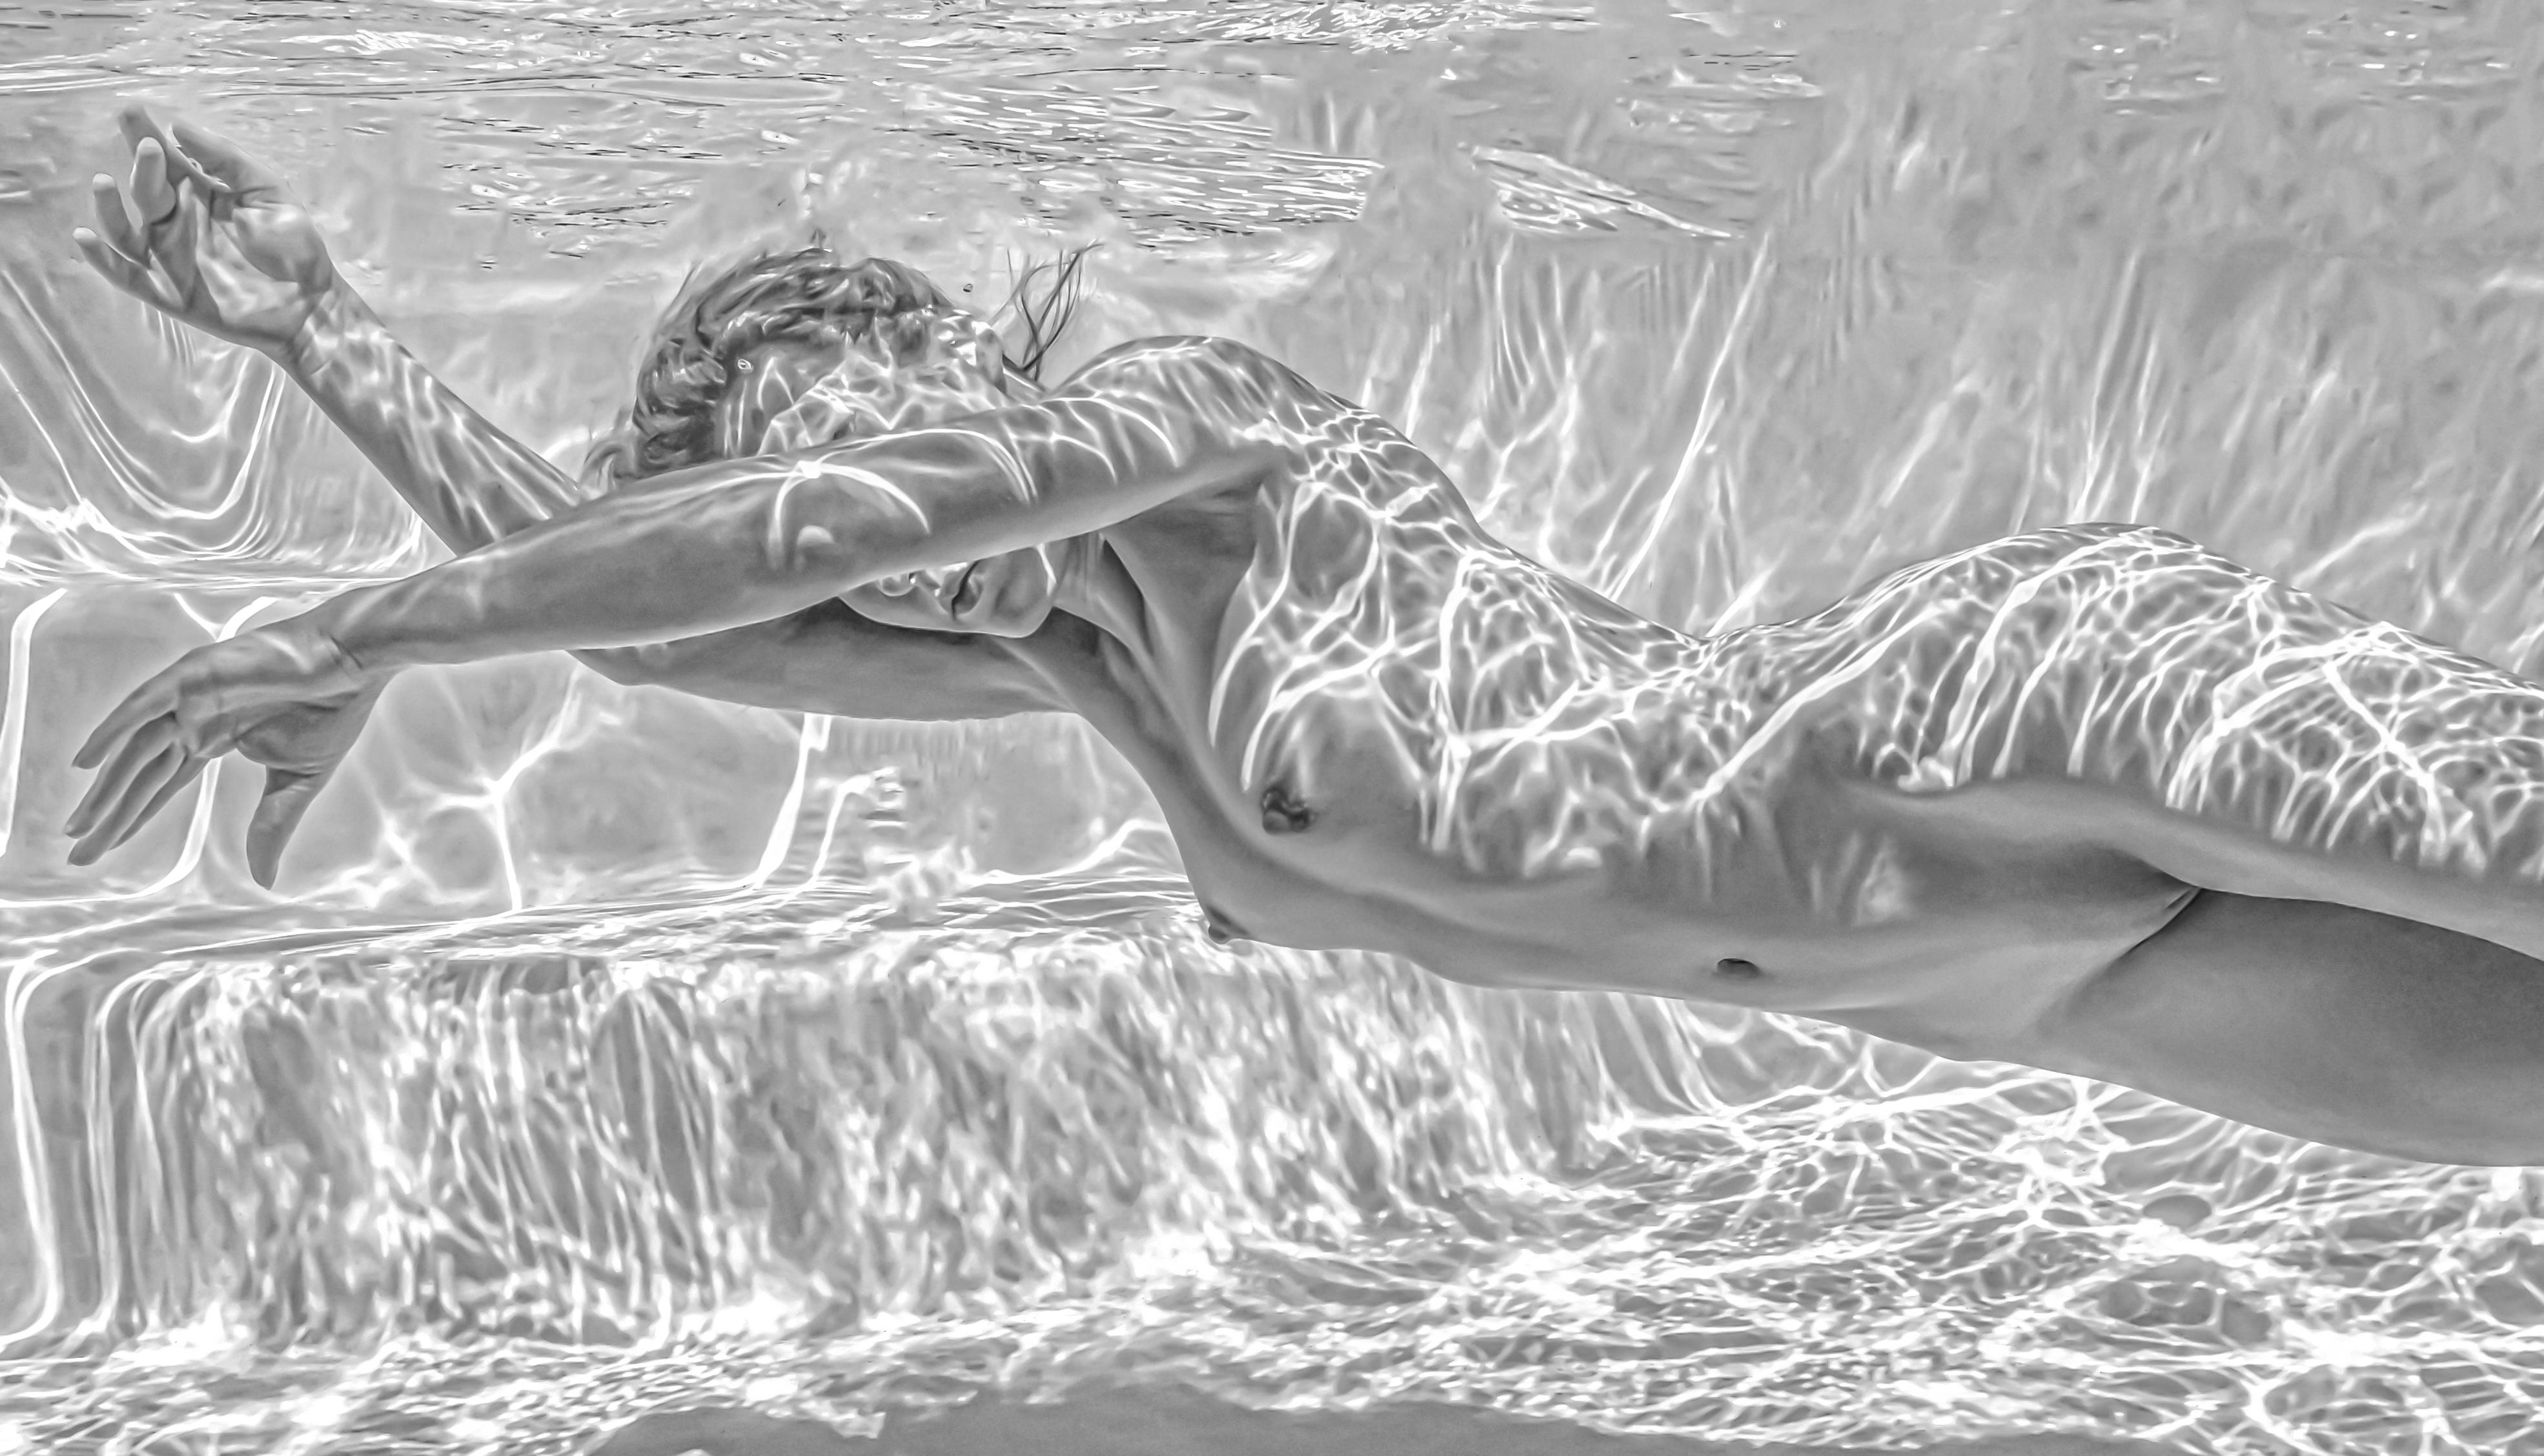 Thunderweb - underwater black & white nude photograph - print on paper 16